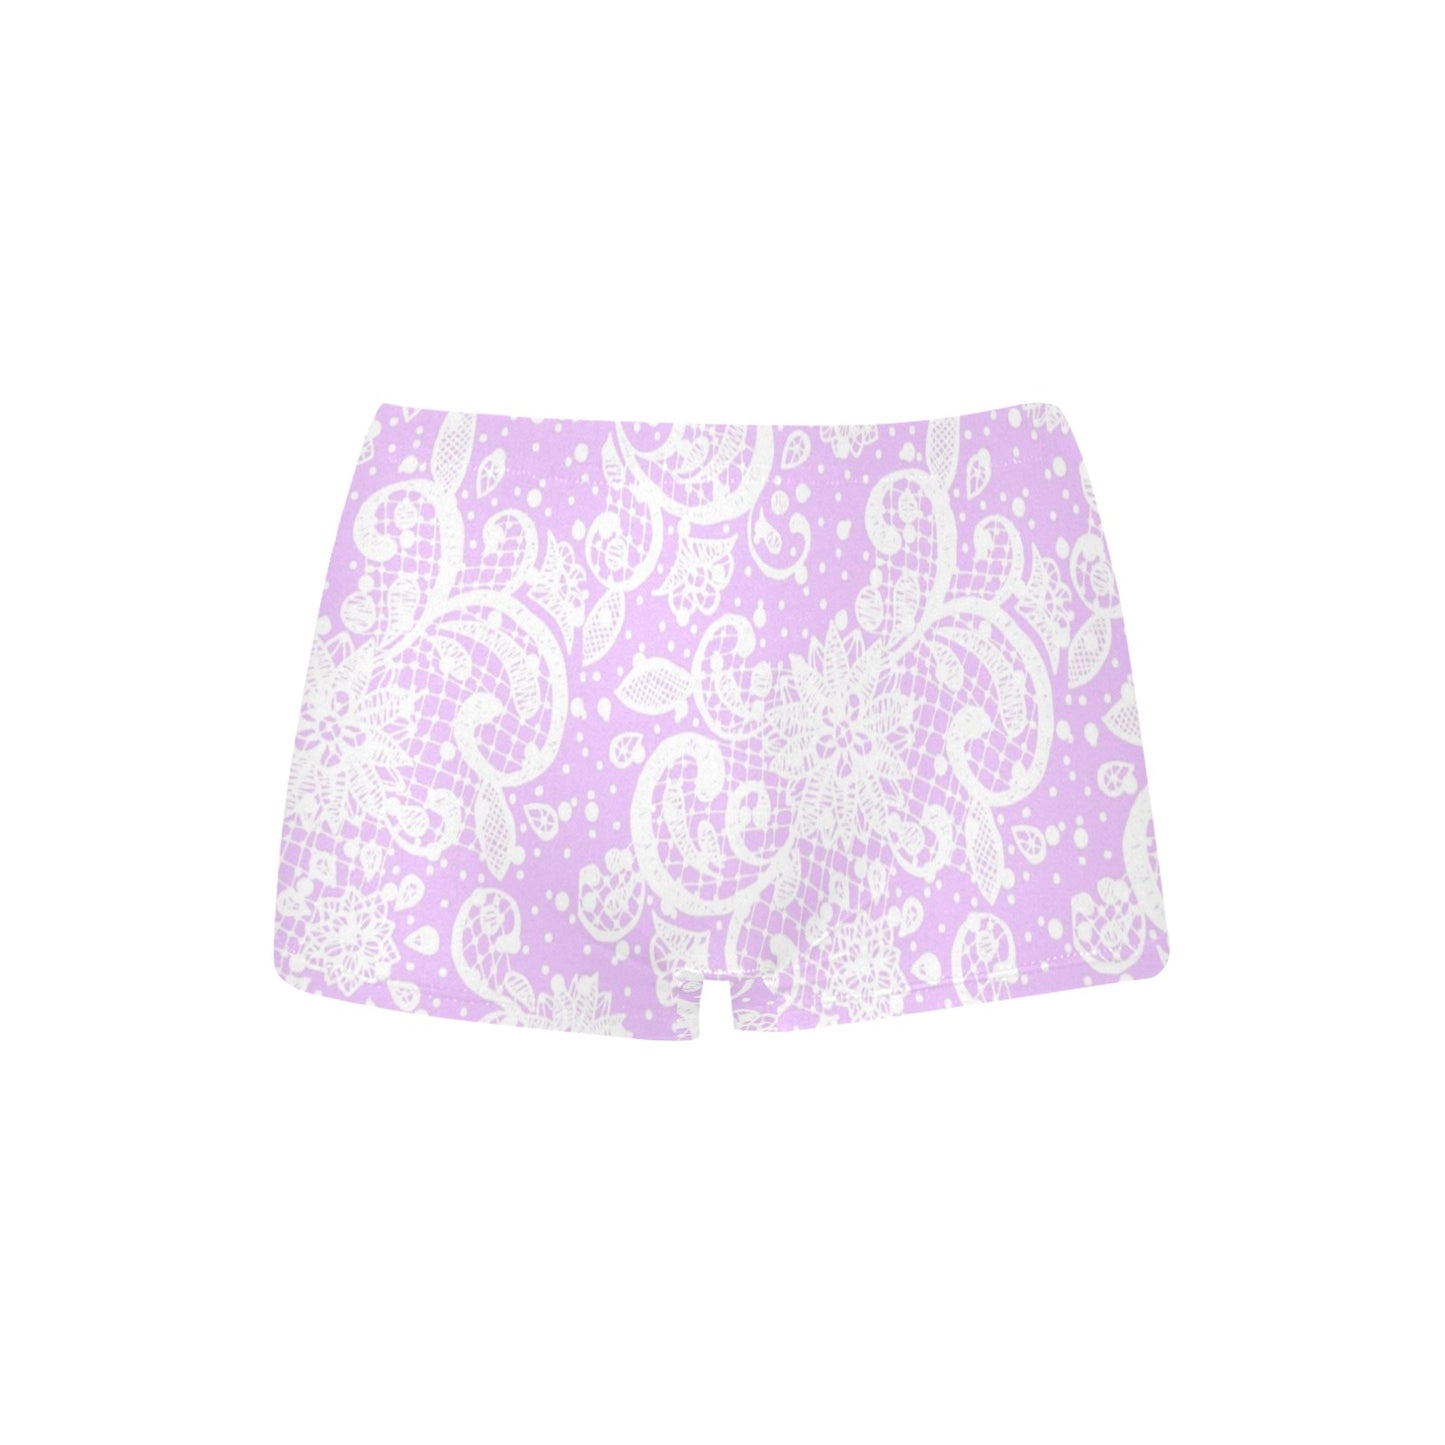 Printed Lace Boyshorts, daisy dukes, pum pum shorts, shortie shorts , design 06